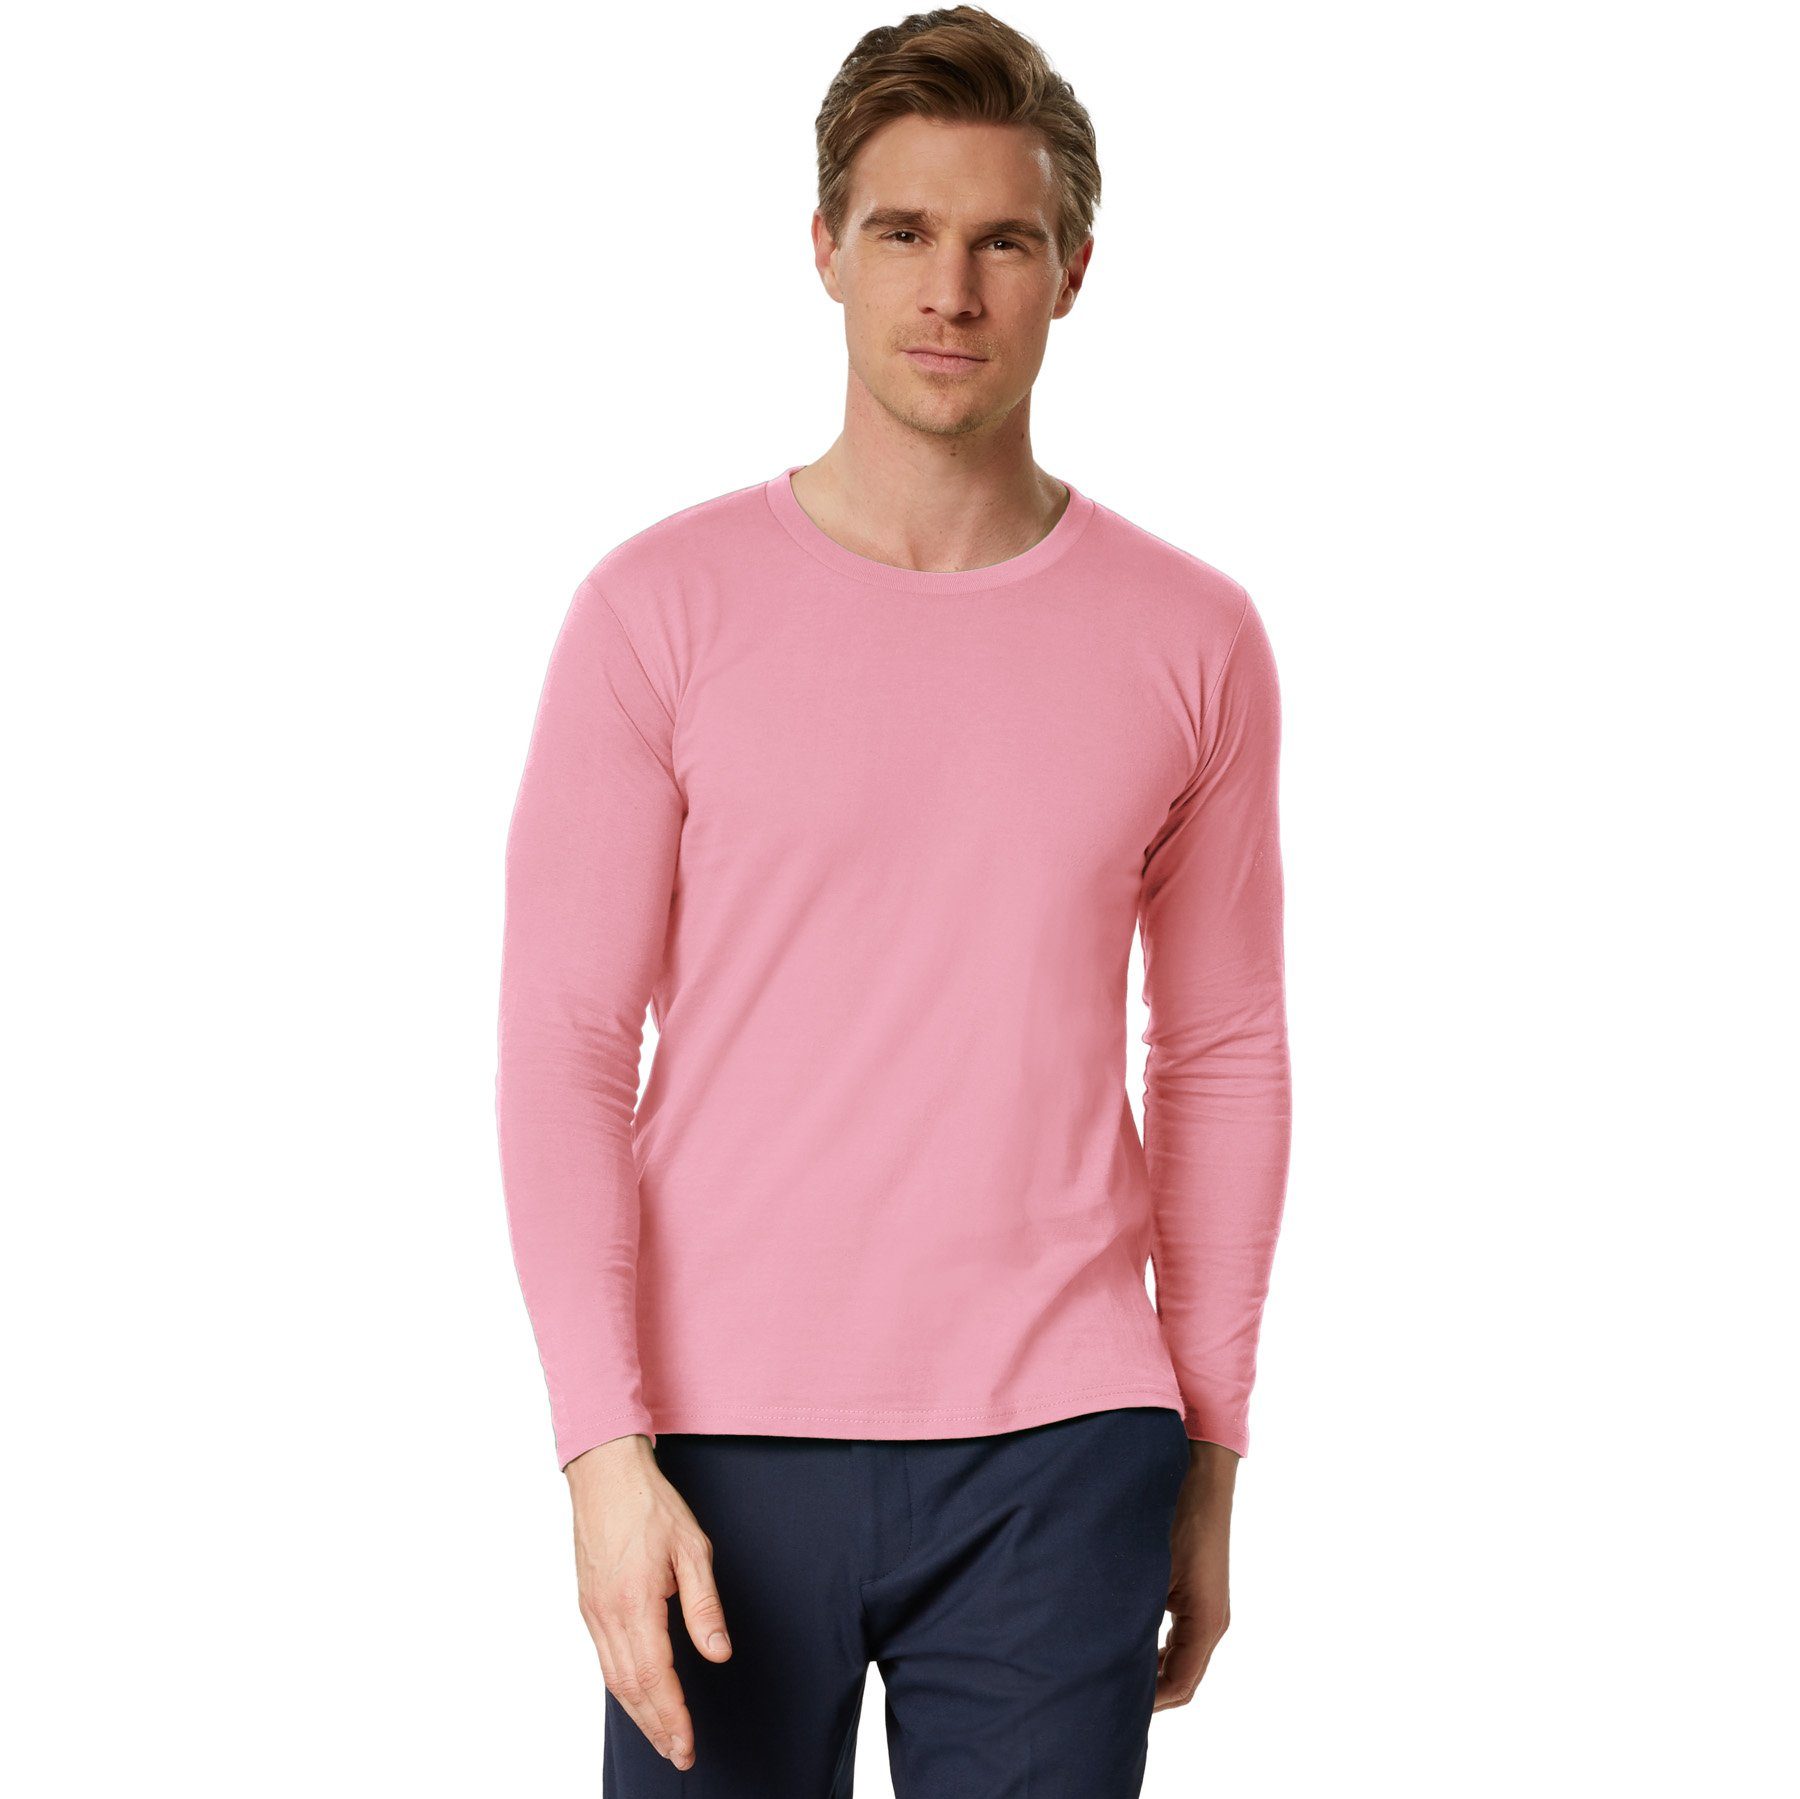 dressforfun Longsleeve Langarm-Shirt Männer Rundhals rosa